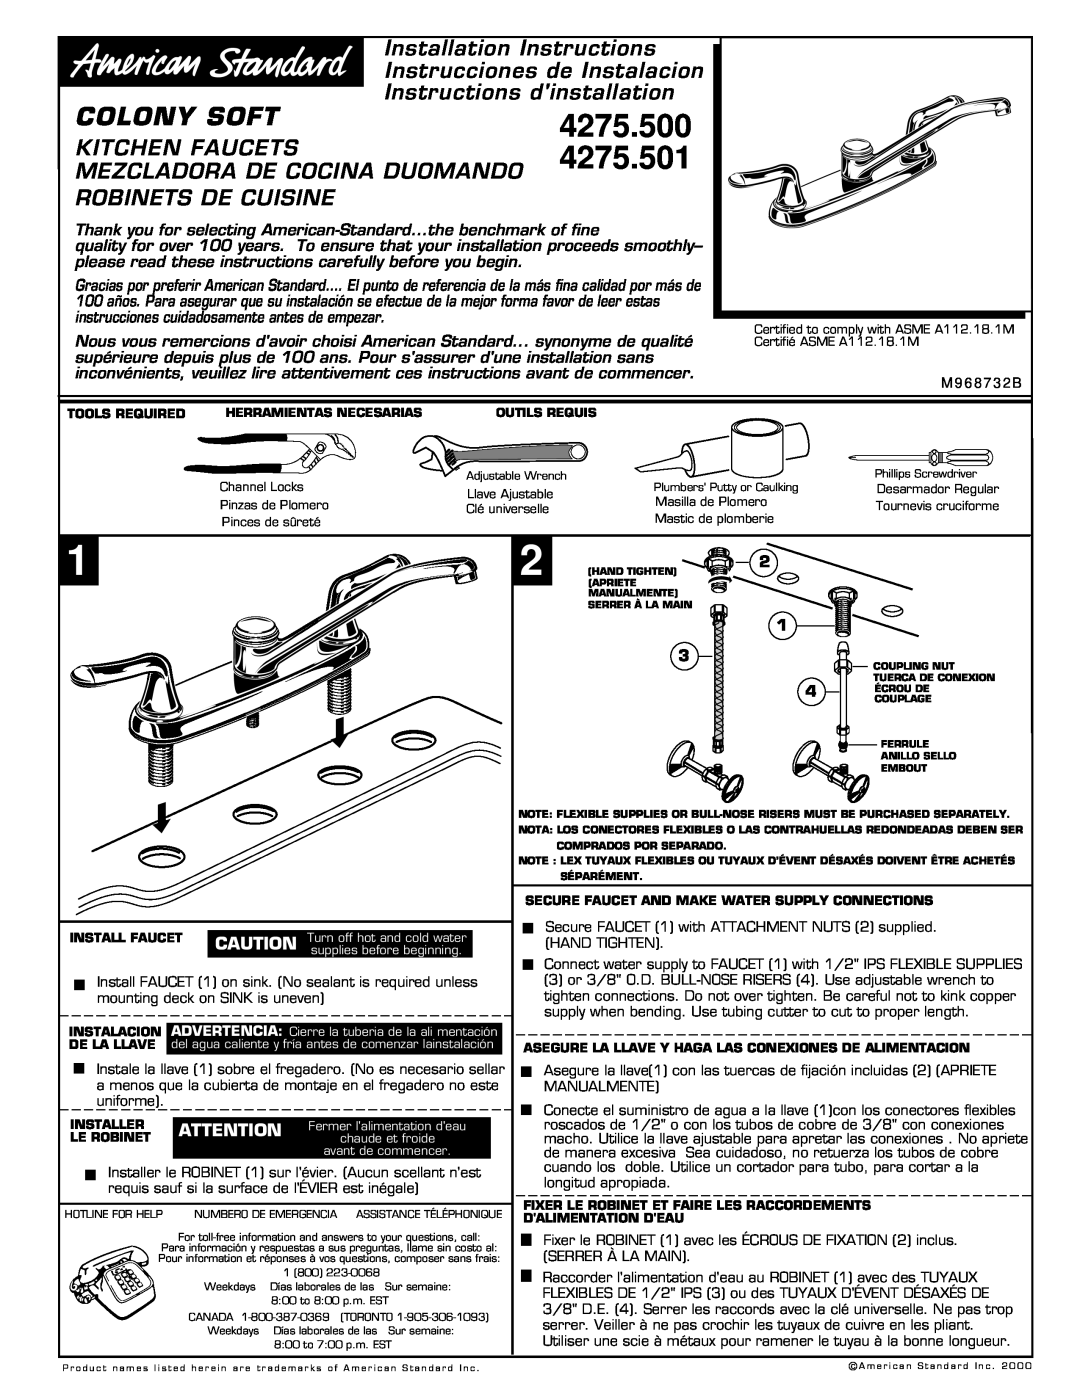 American Standard 4275.500 installation instructions 4275.501, Colony Soft, Installation Instructions, Kitchen Faucets 